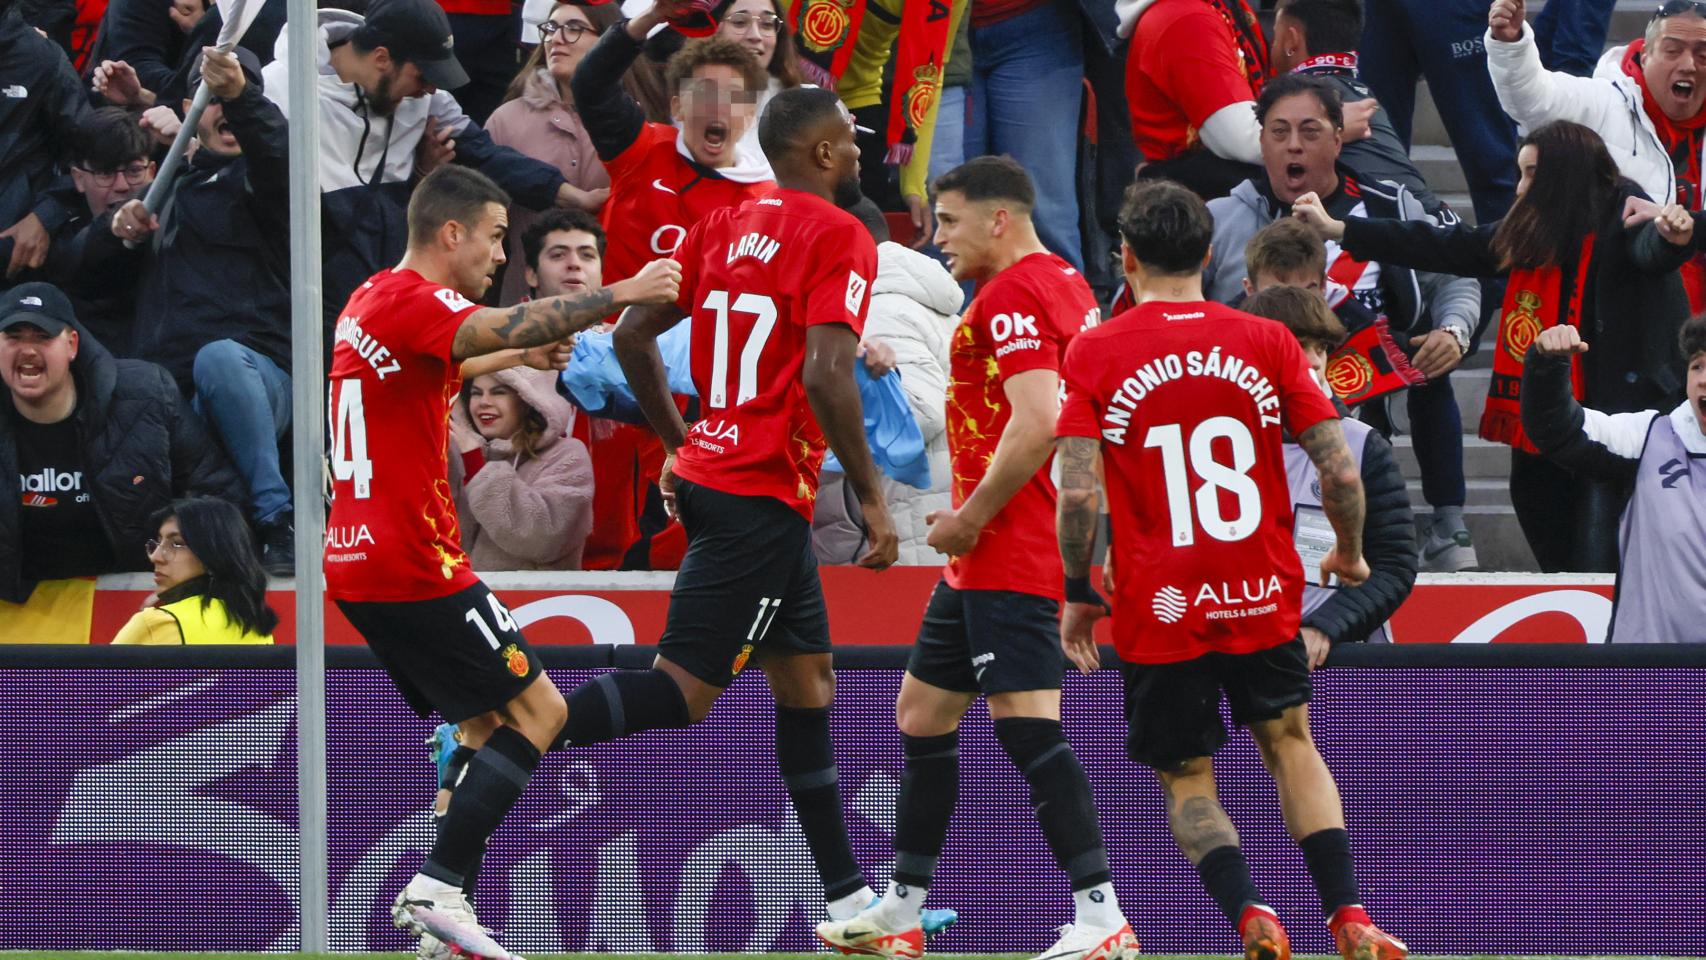 Los jugadores del Mallorca celebran un gol.